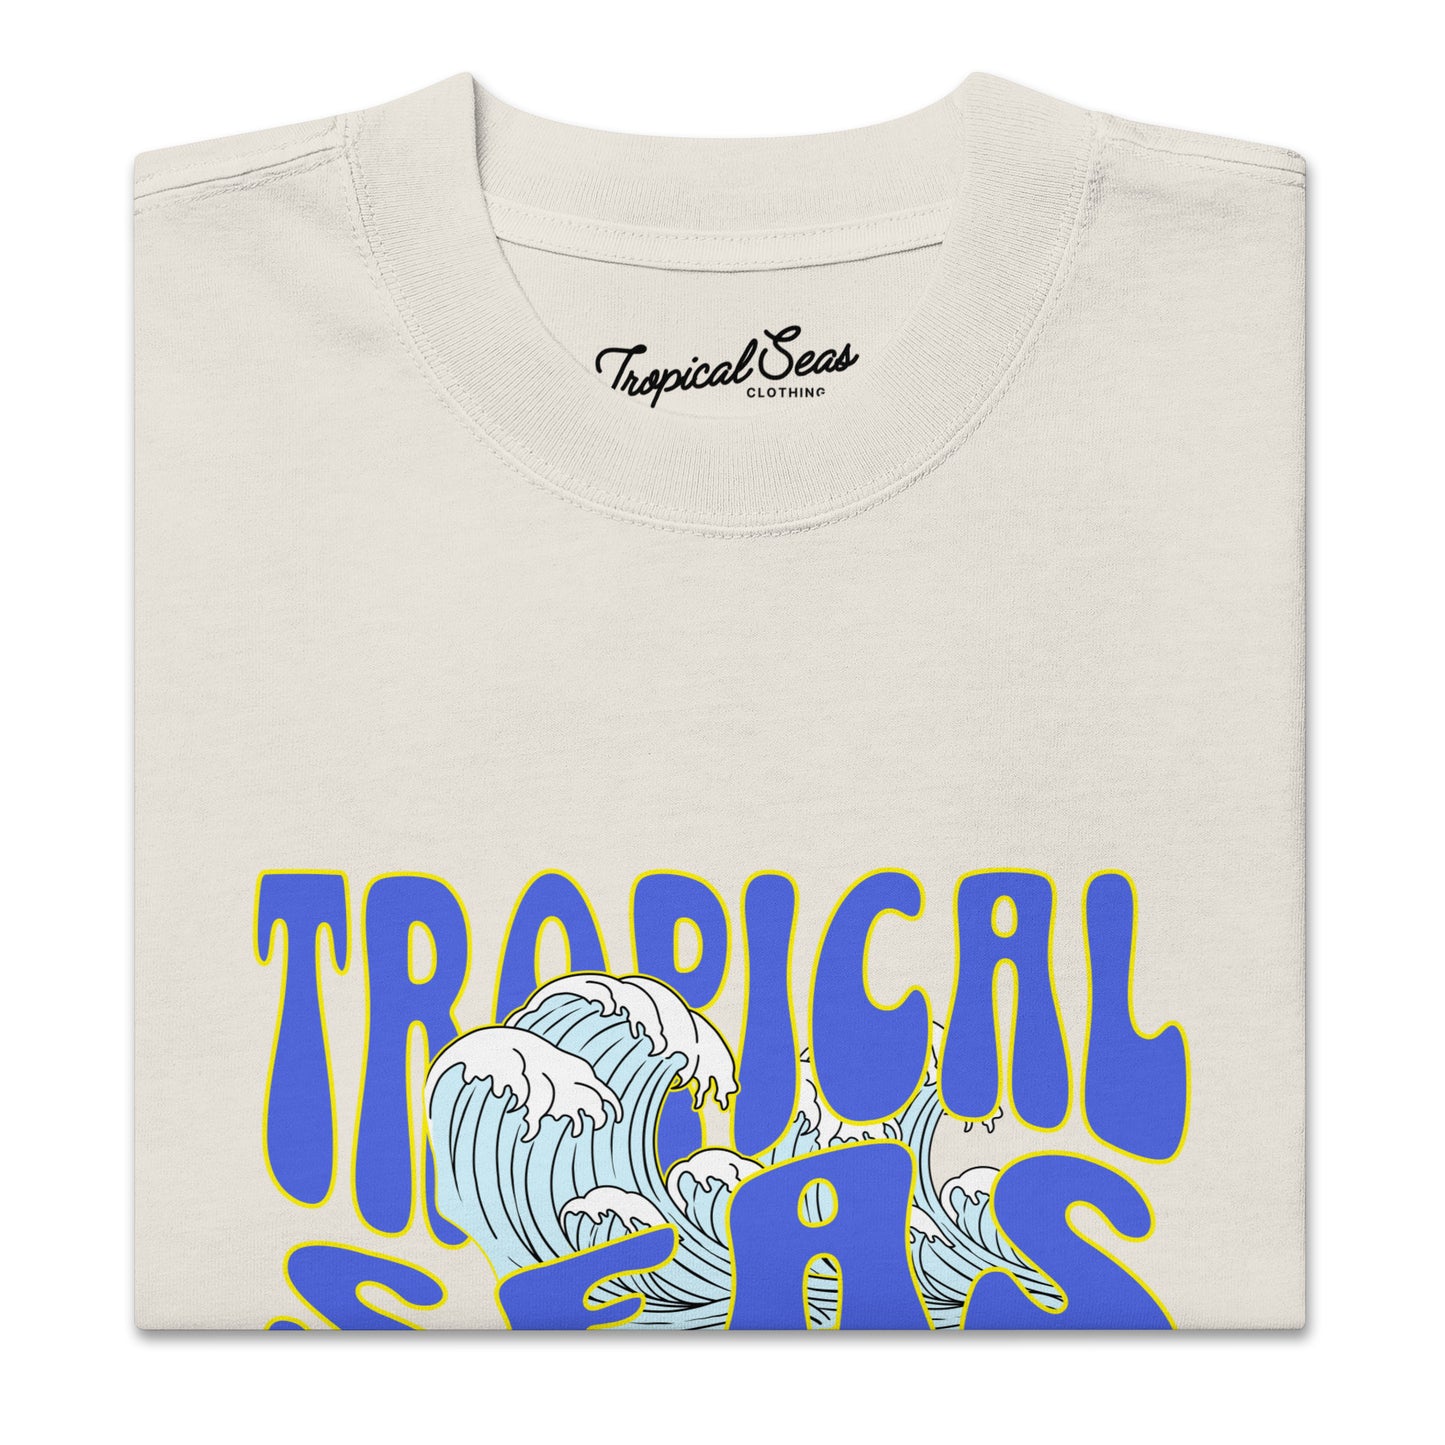 Oversized Wild Tropical Seas faded t-shirt - Tropical Seas Clothing 